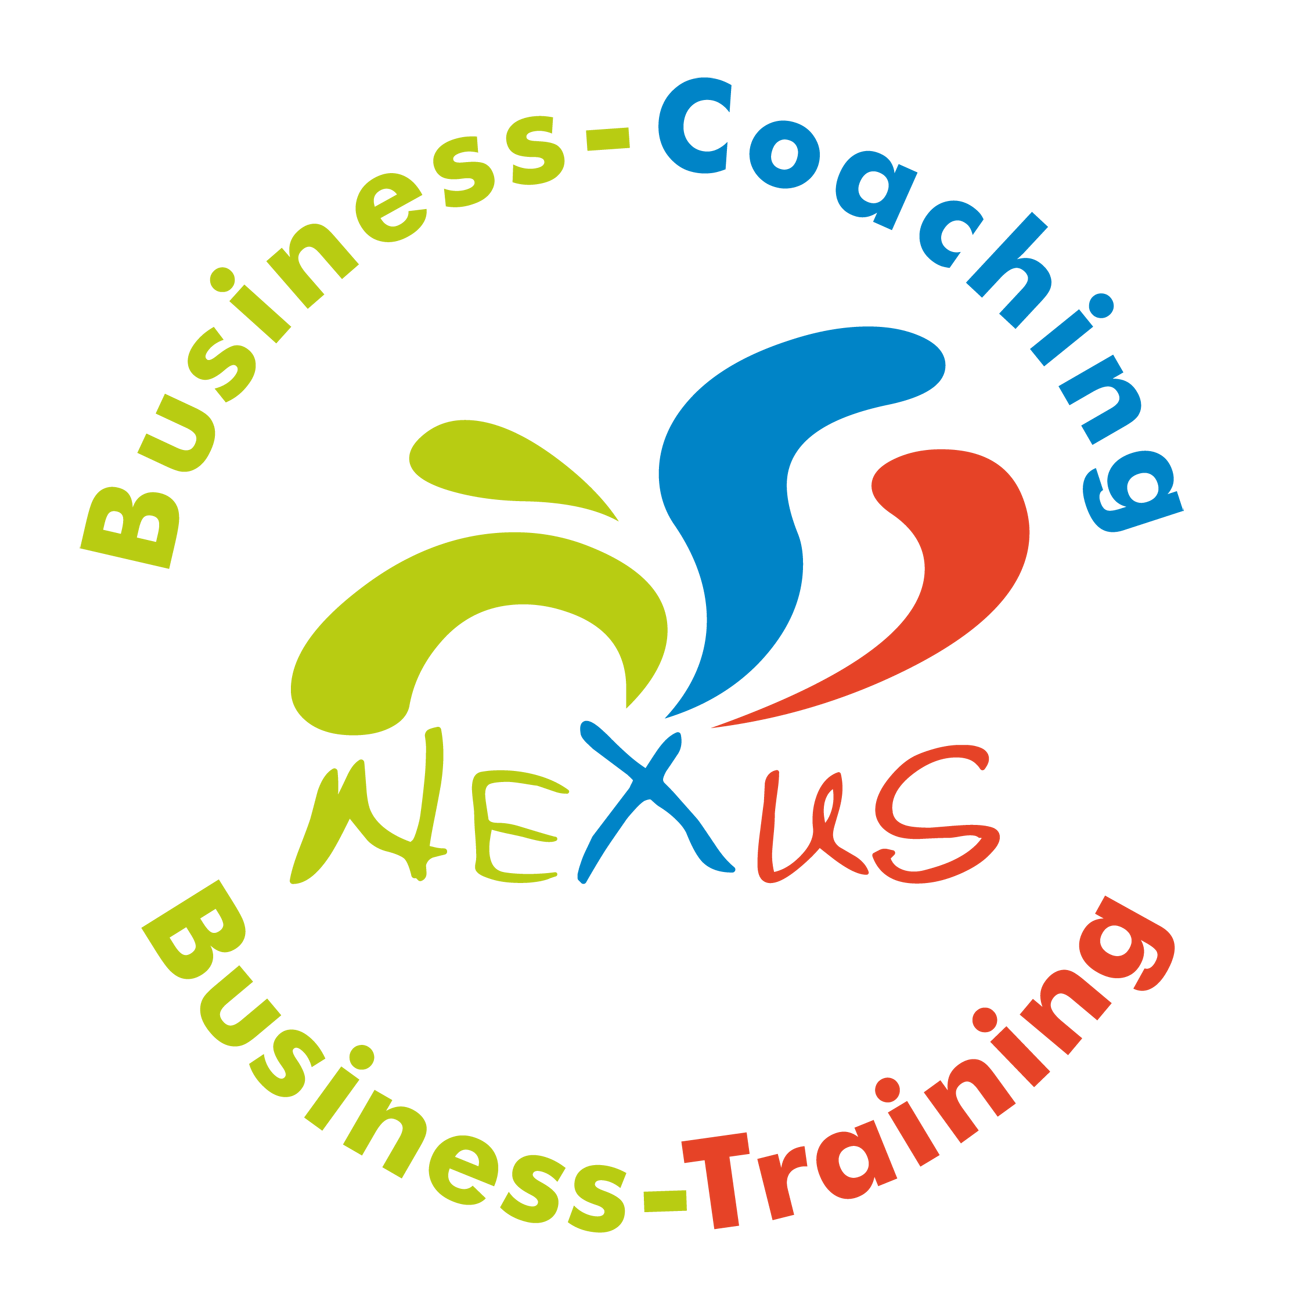 Business-Coaching Hofheim, Führungskräfte-Coaching, Führungskräftetraining, Persönlichkeitstraining